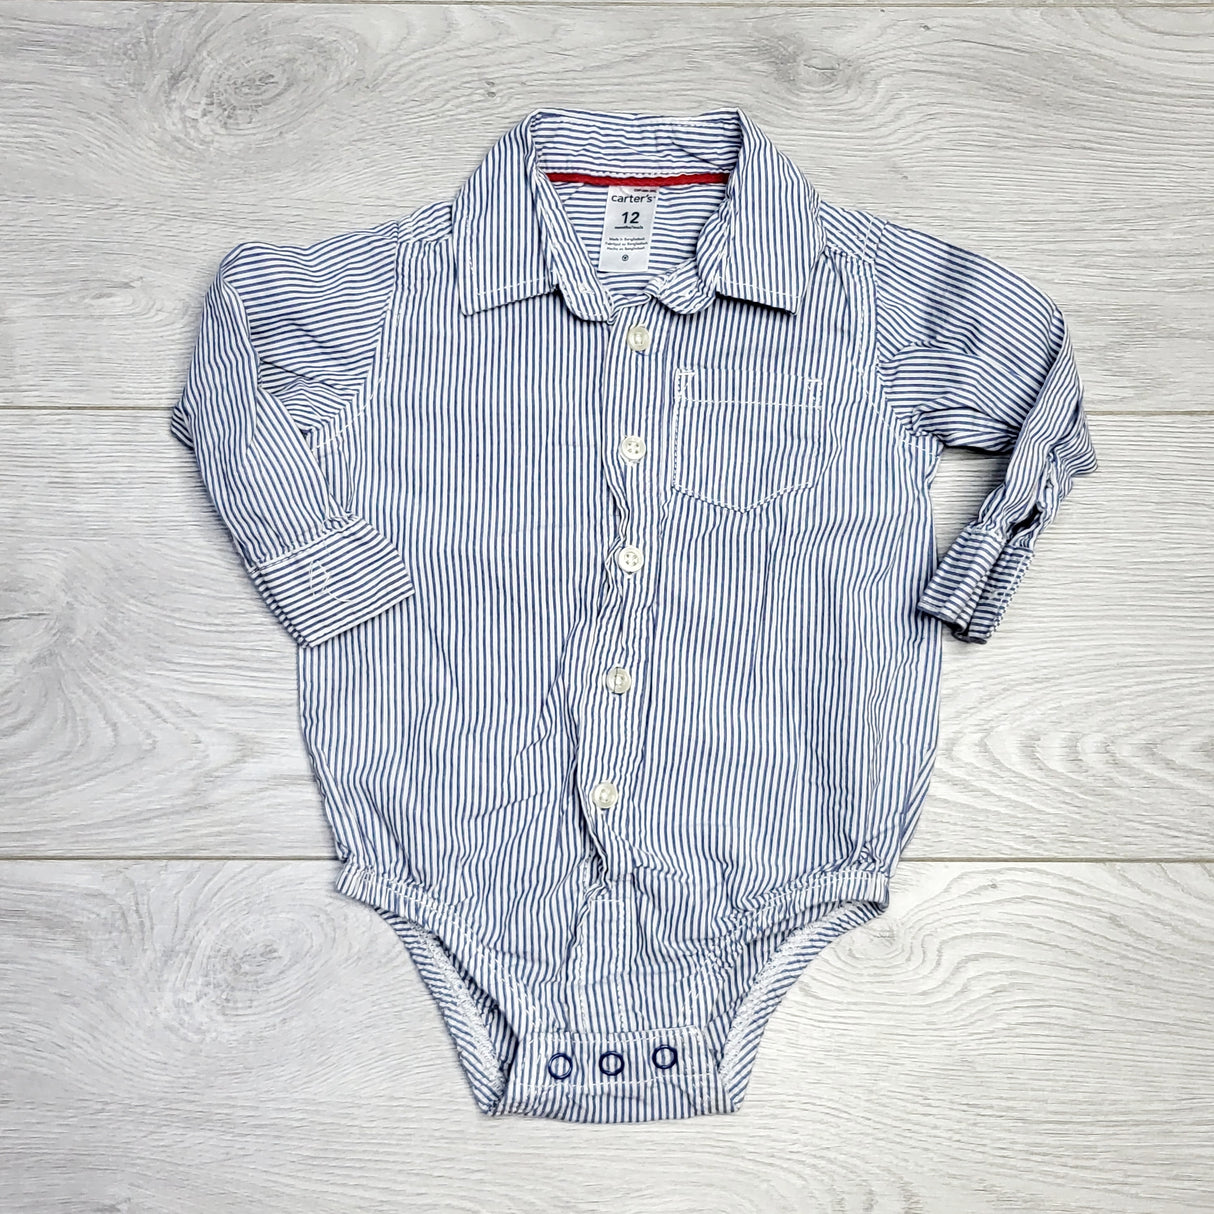 RZA2 - Carters blue striped button down onesie. Size 12 months